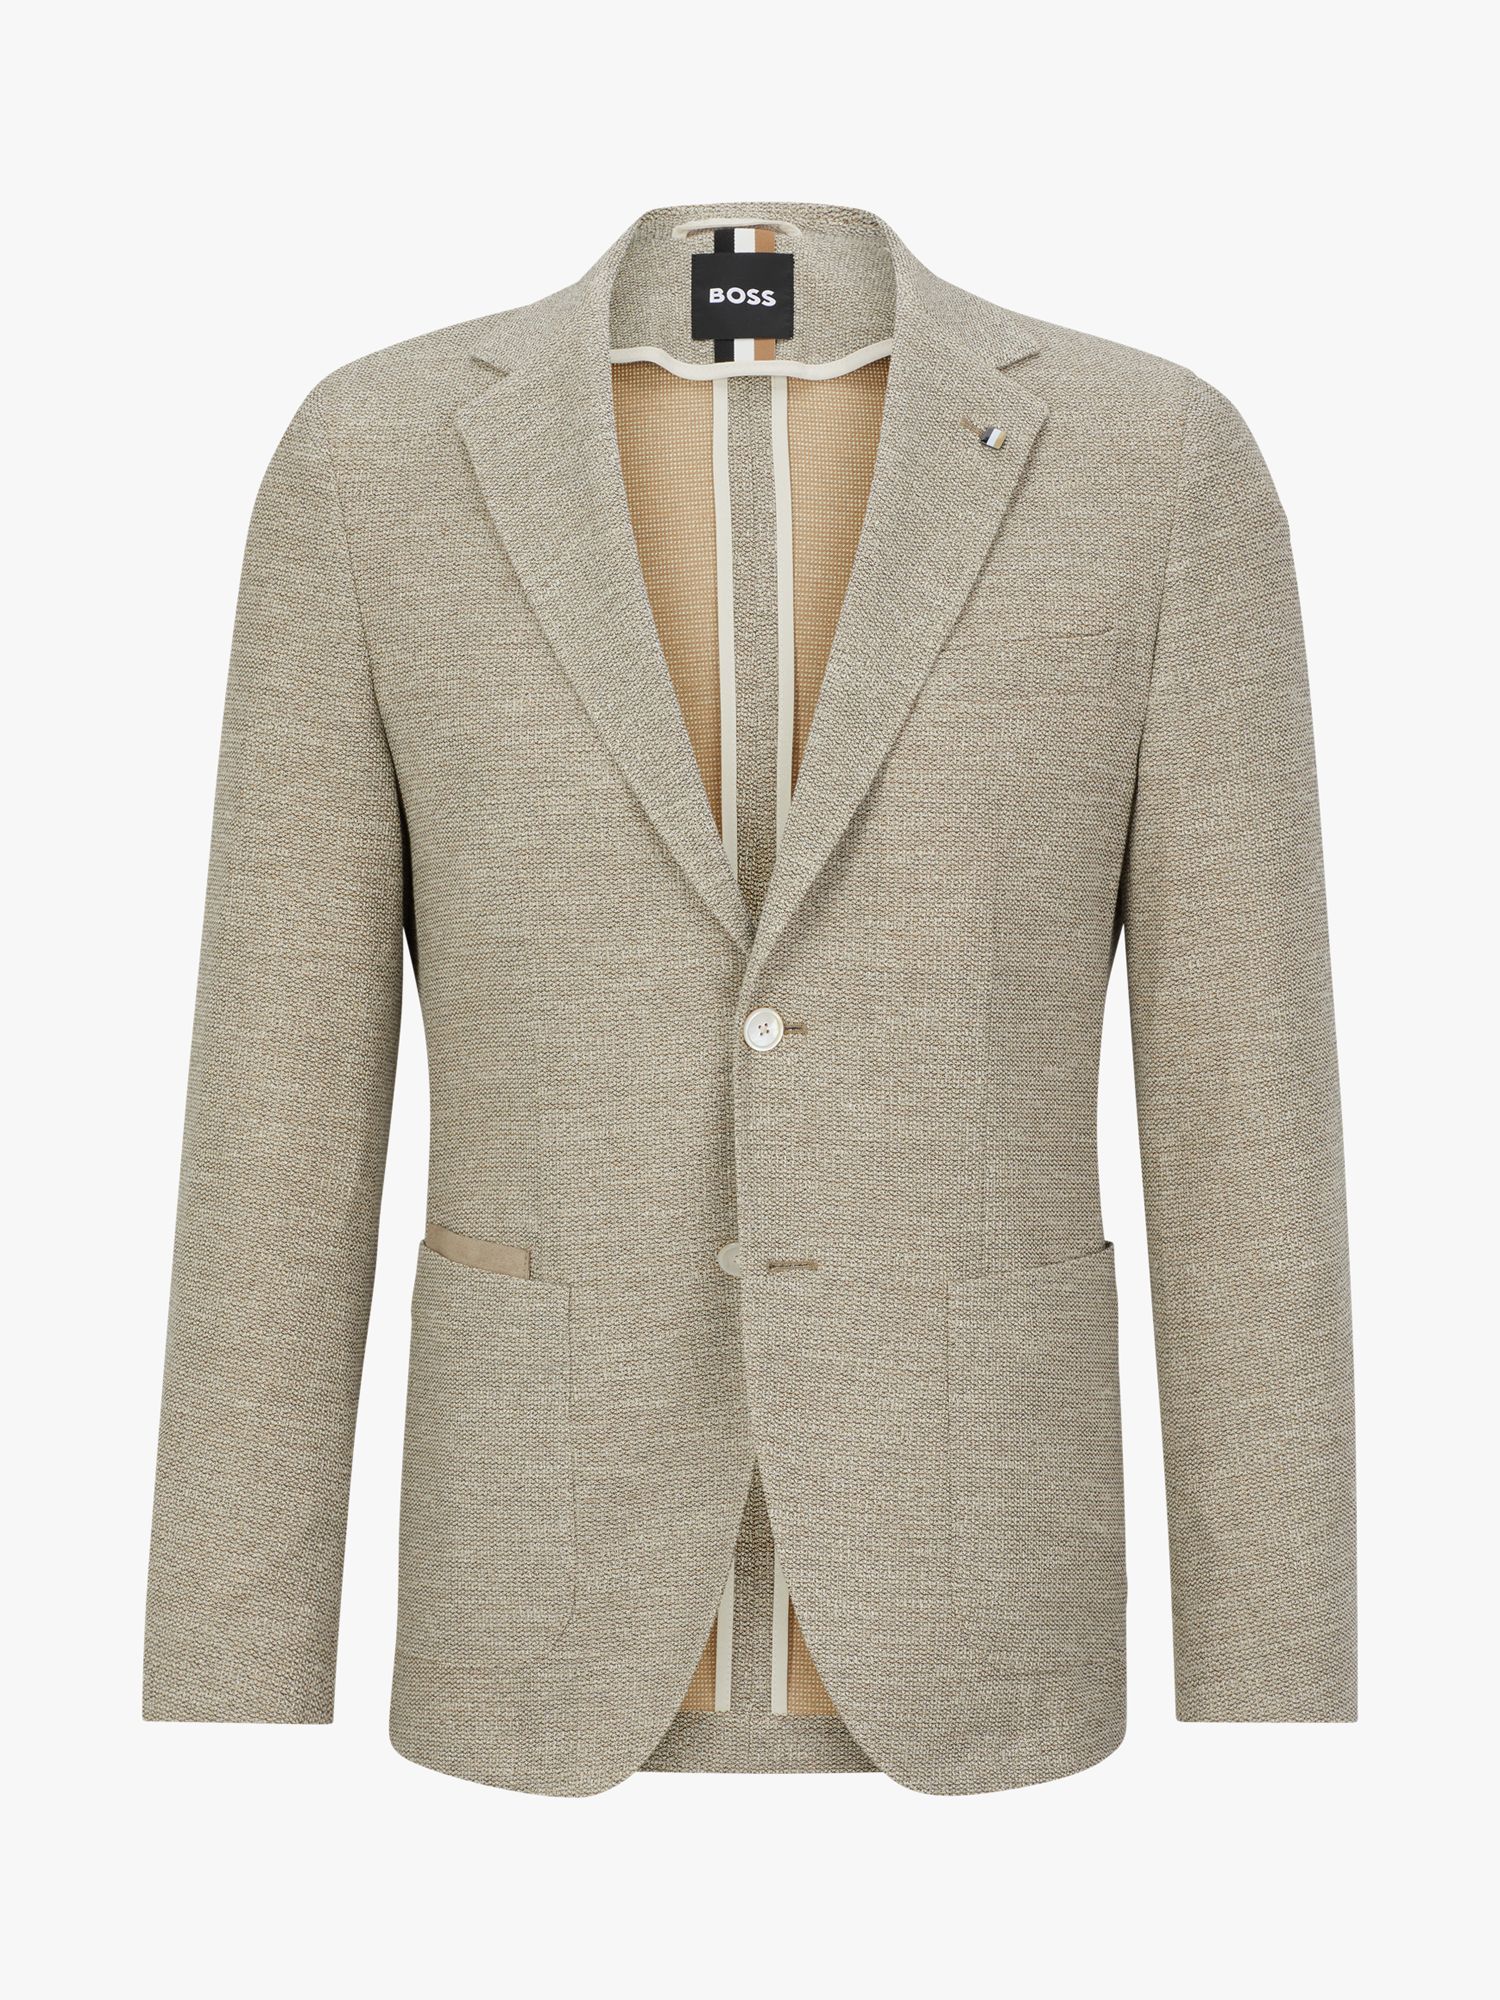 HUGO Jaye Elbow Patch Suit Jacket, Light Beige at John Lewis & Partners